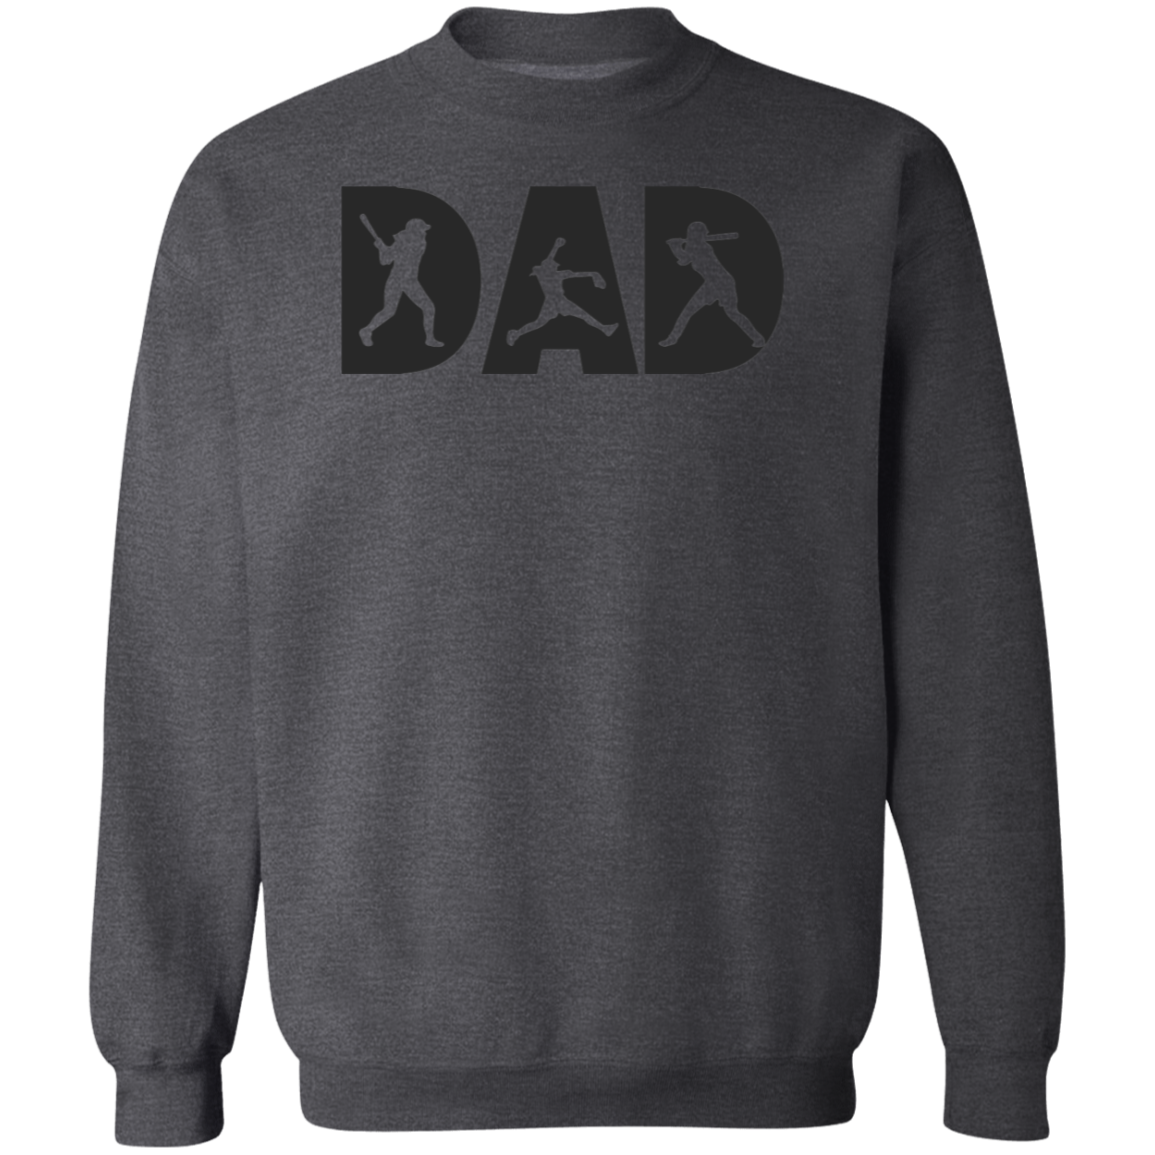 DAD Softball Premium Crew Neck Sweatshirt